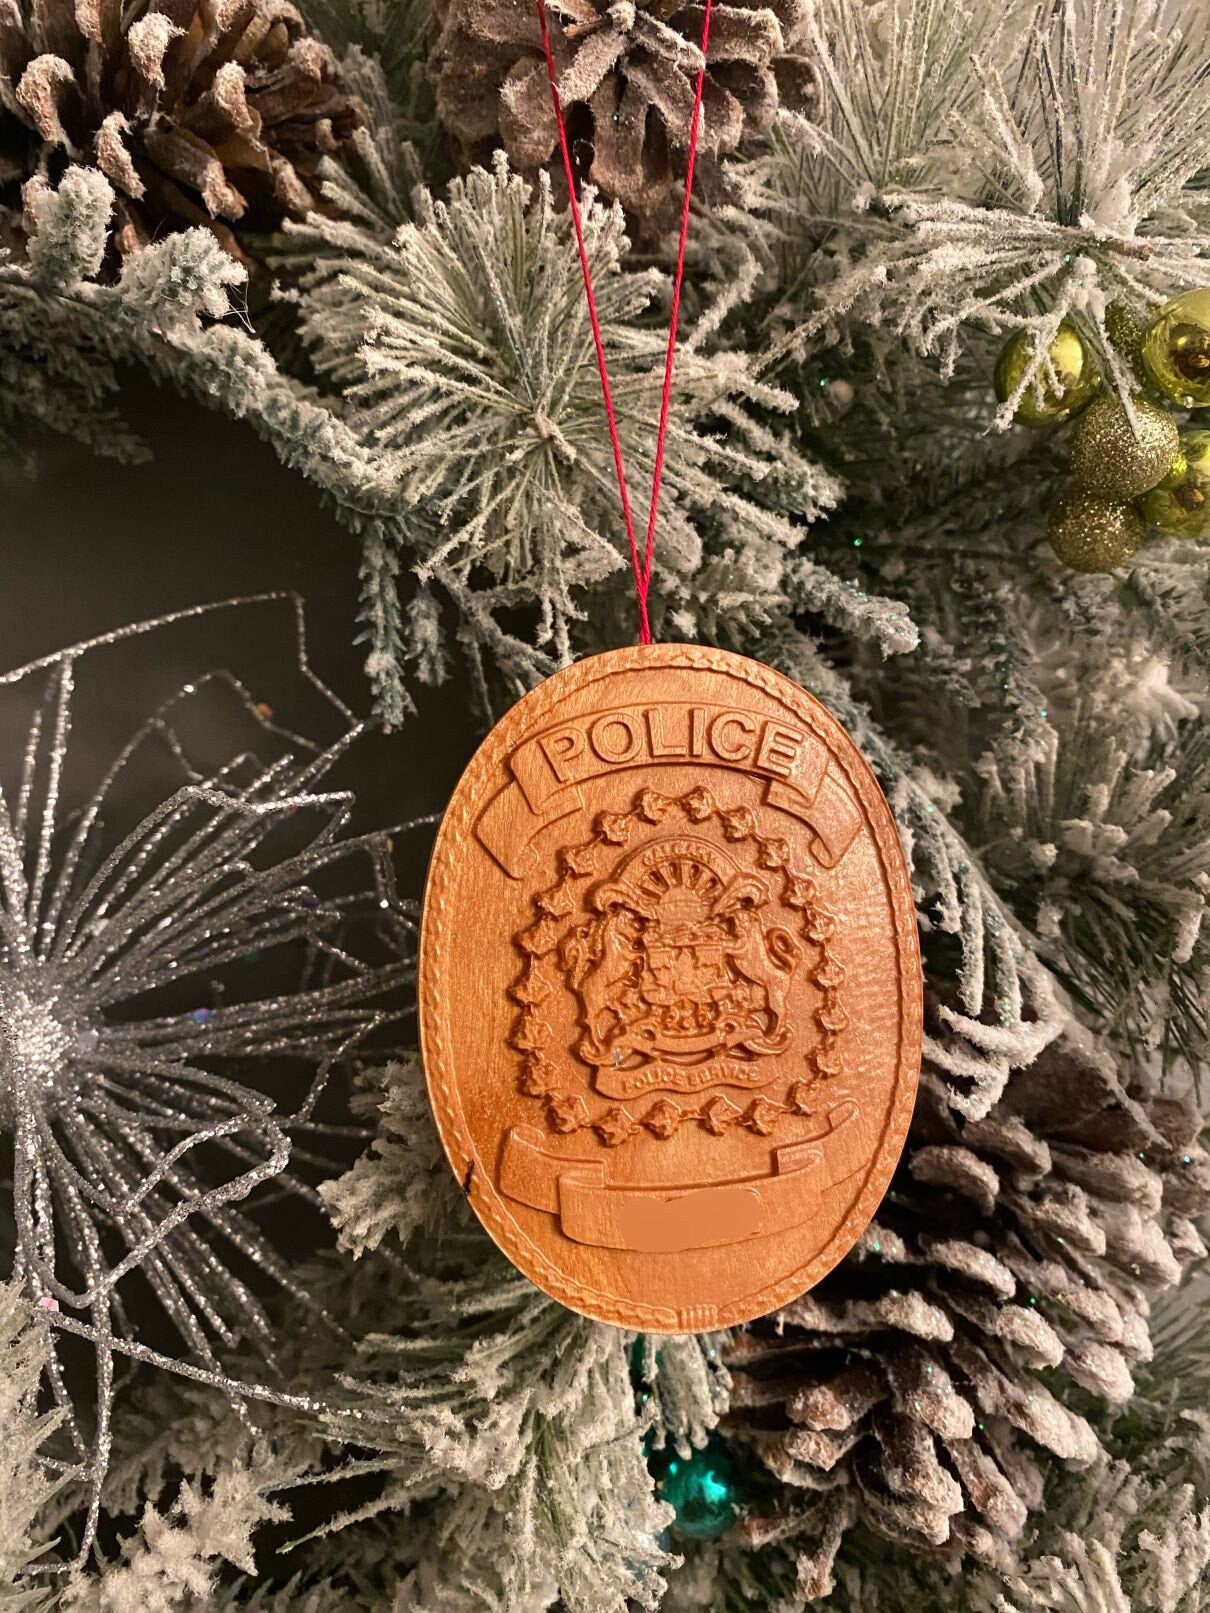 Calgary Police Christmas Ornament